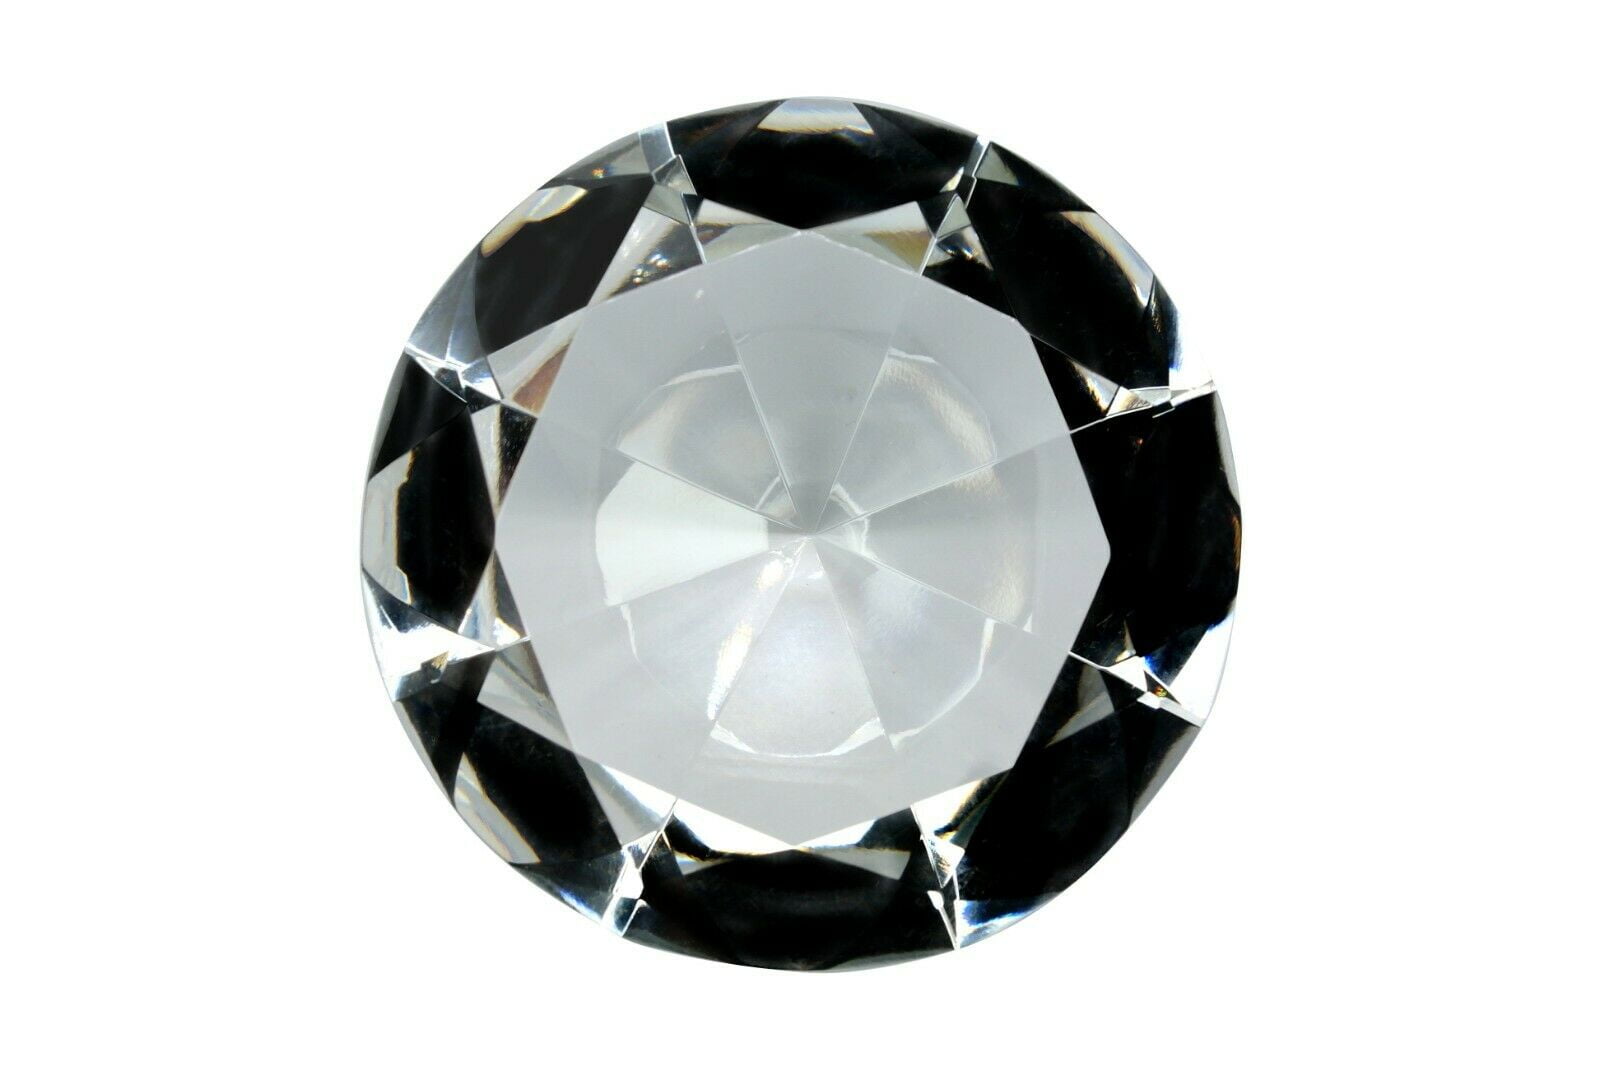 80 mm Dark Blue Diamond Heart Shaped Crystal Jewel Paperweight by Tripact 02 